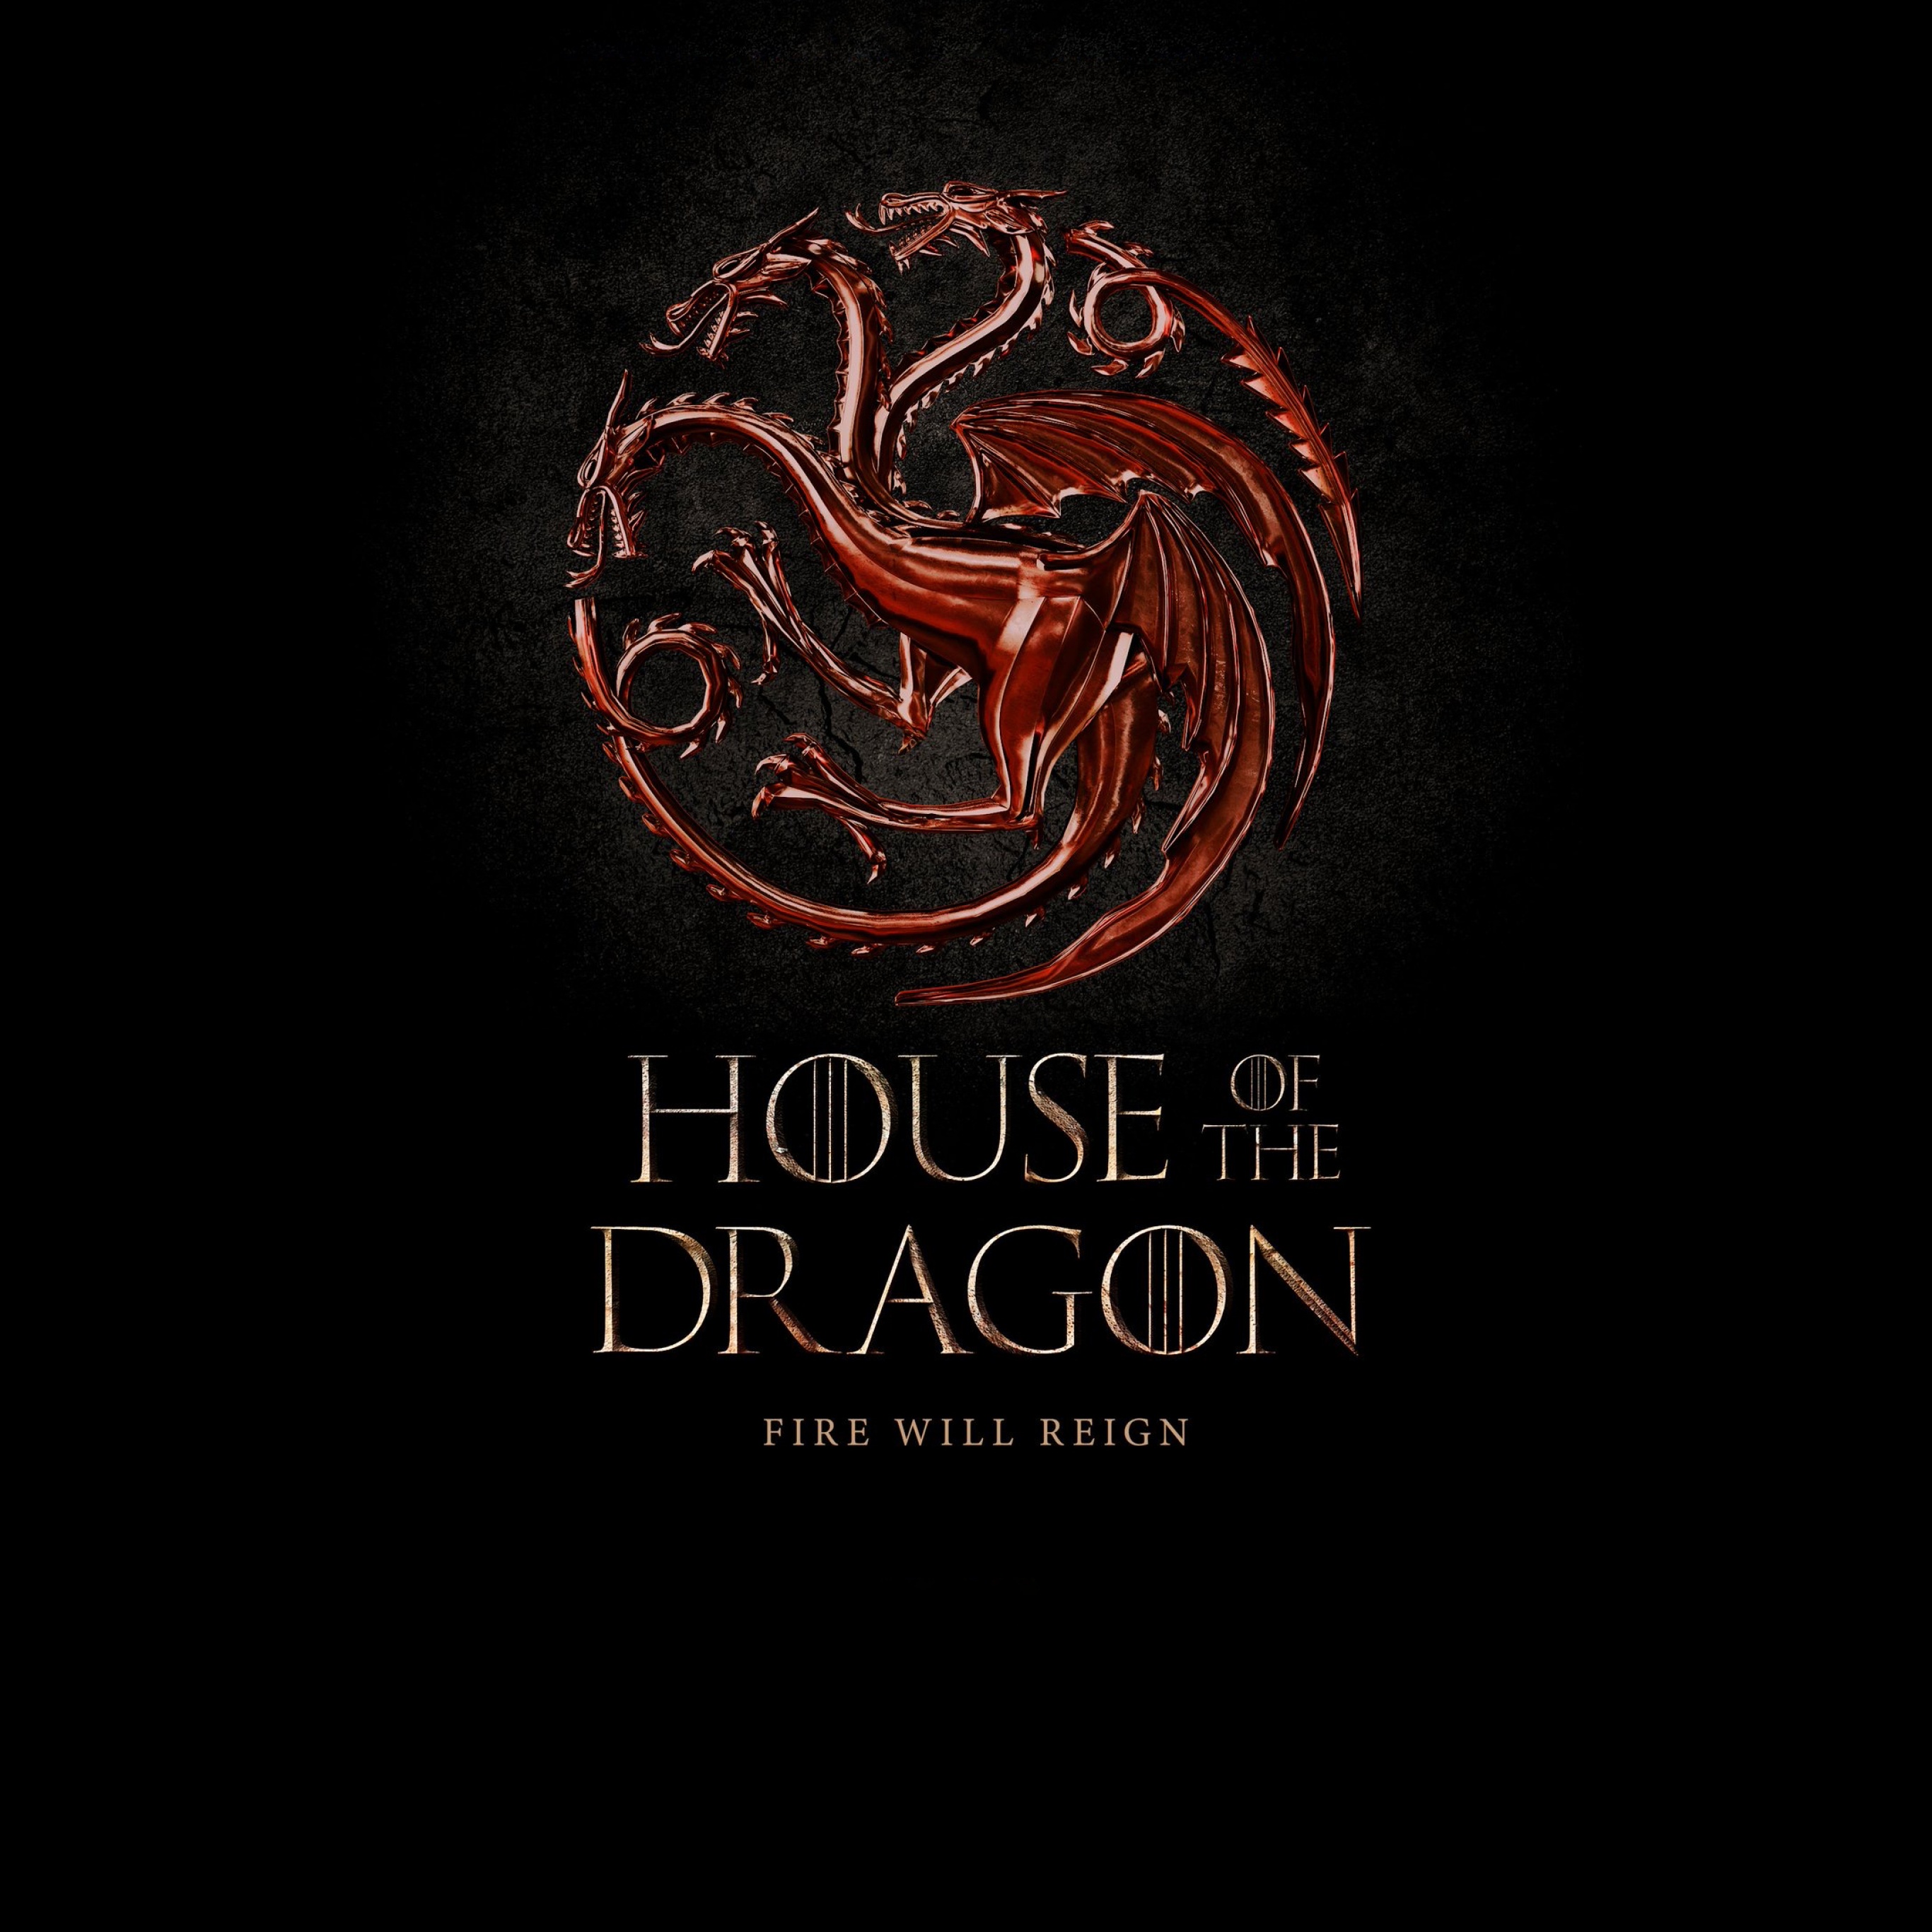 House of the Dragon Wallpaper 4K, Game of Thrones, Black/Dark, #7810